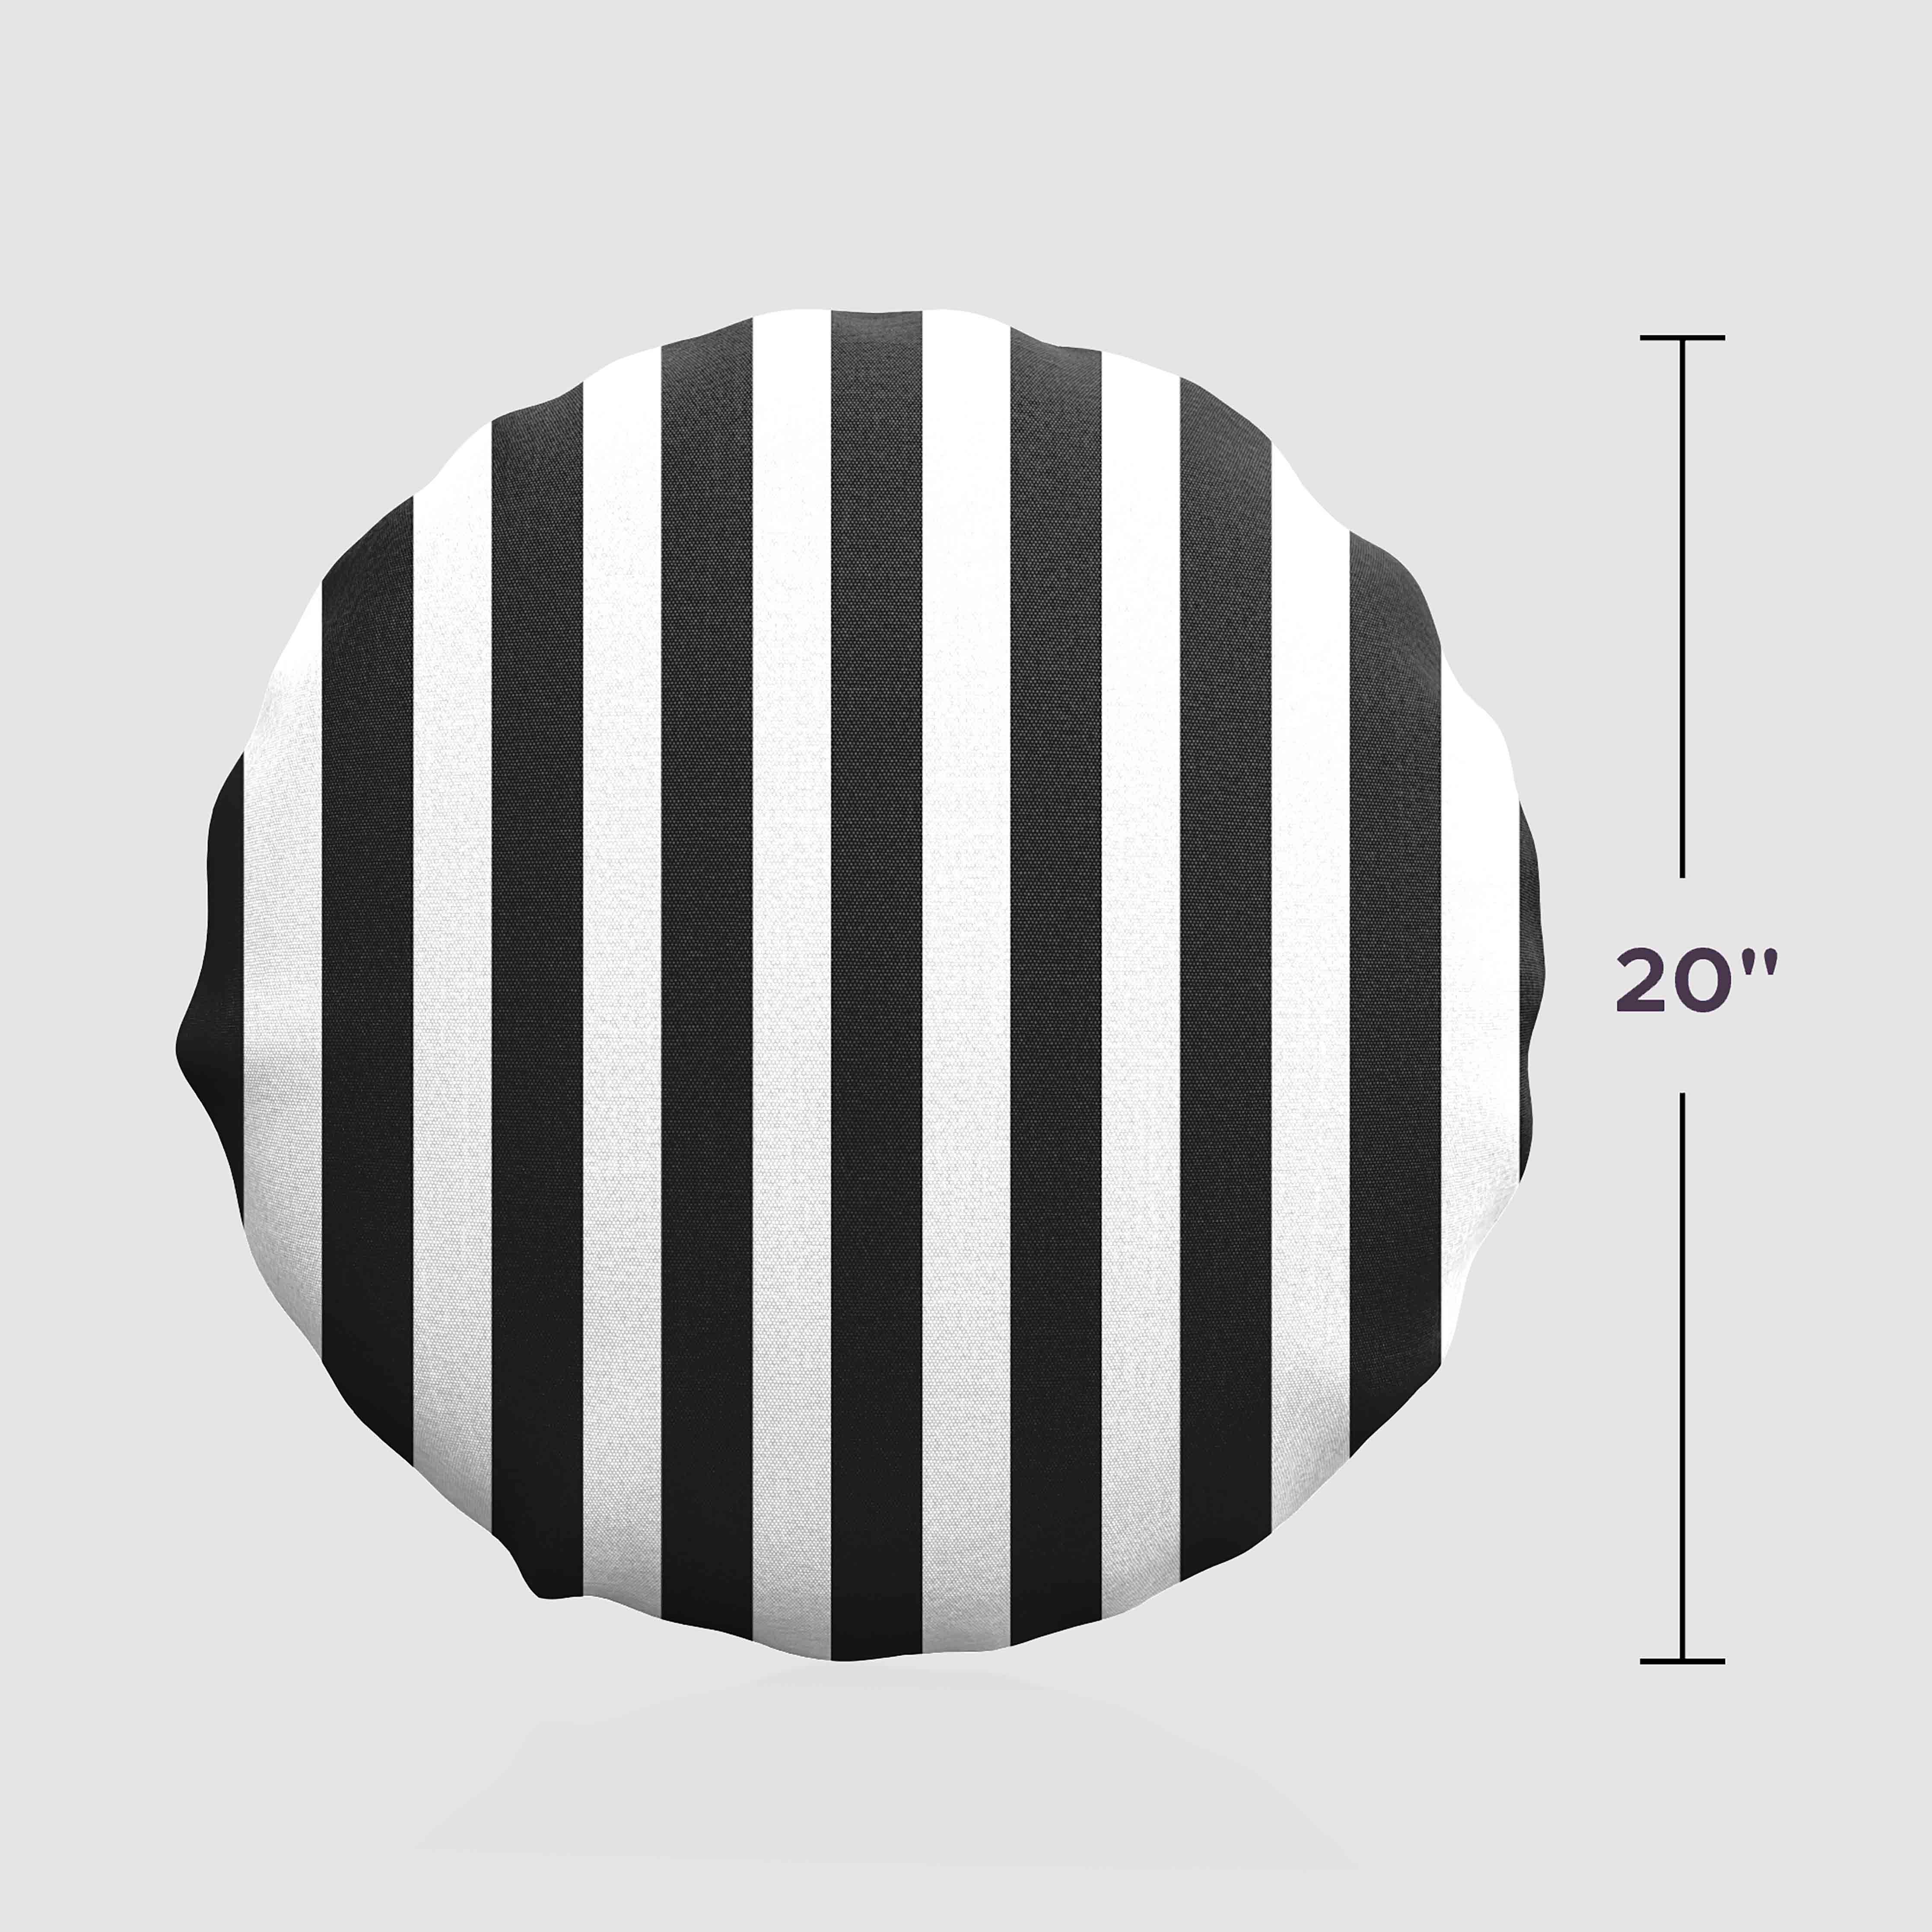 #size_20 in Diameter